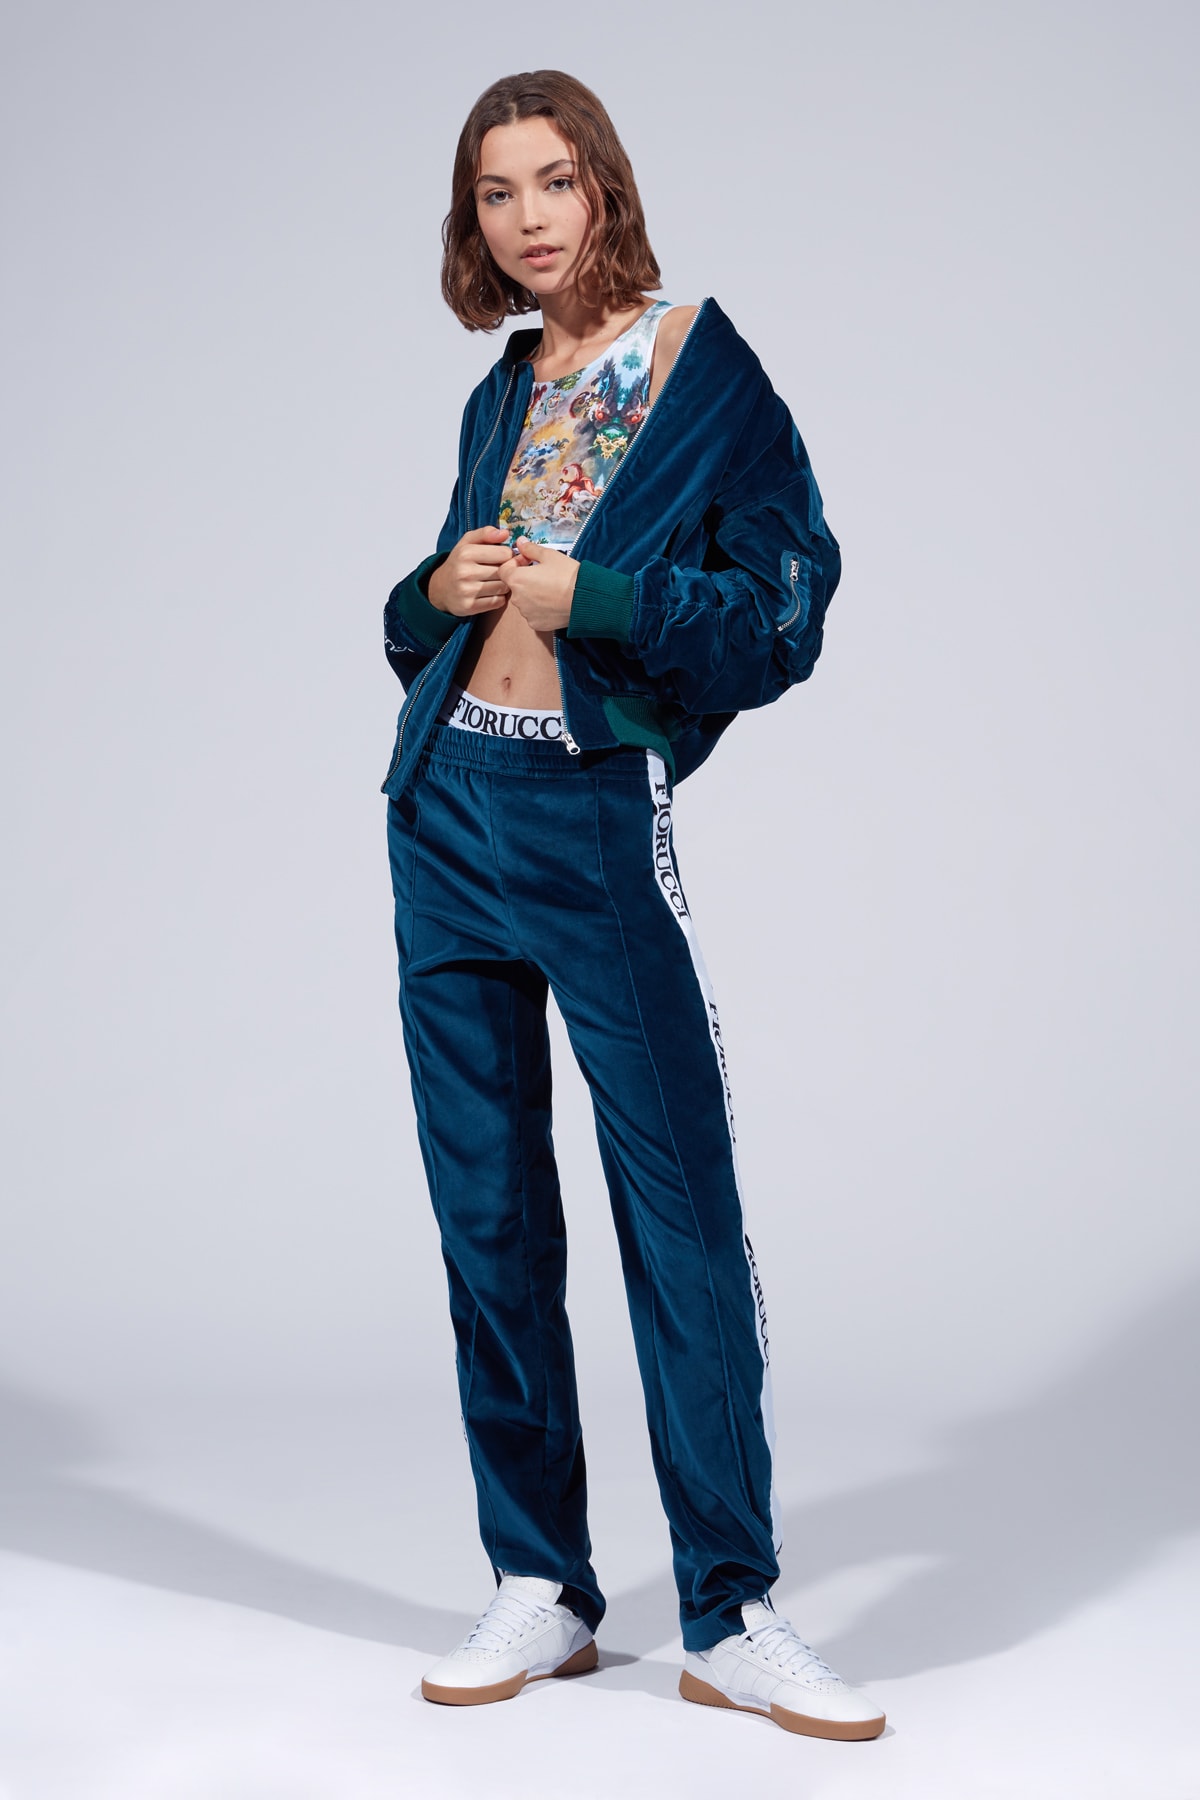 Fiorucci Spring Summer 2019 Collection Lookbook Velour Sweatsuit Blue